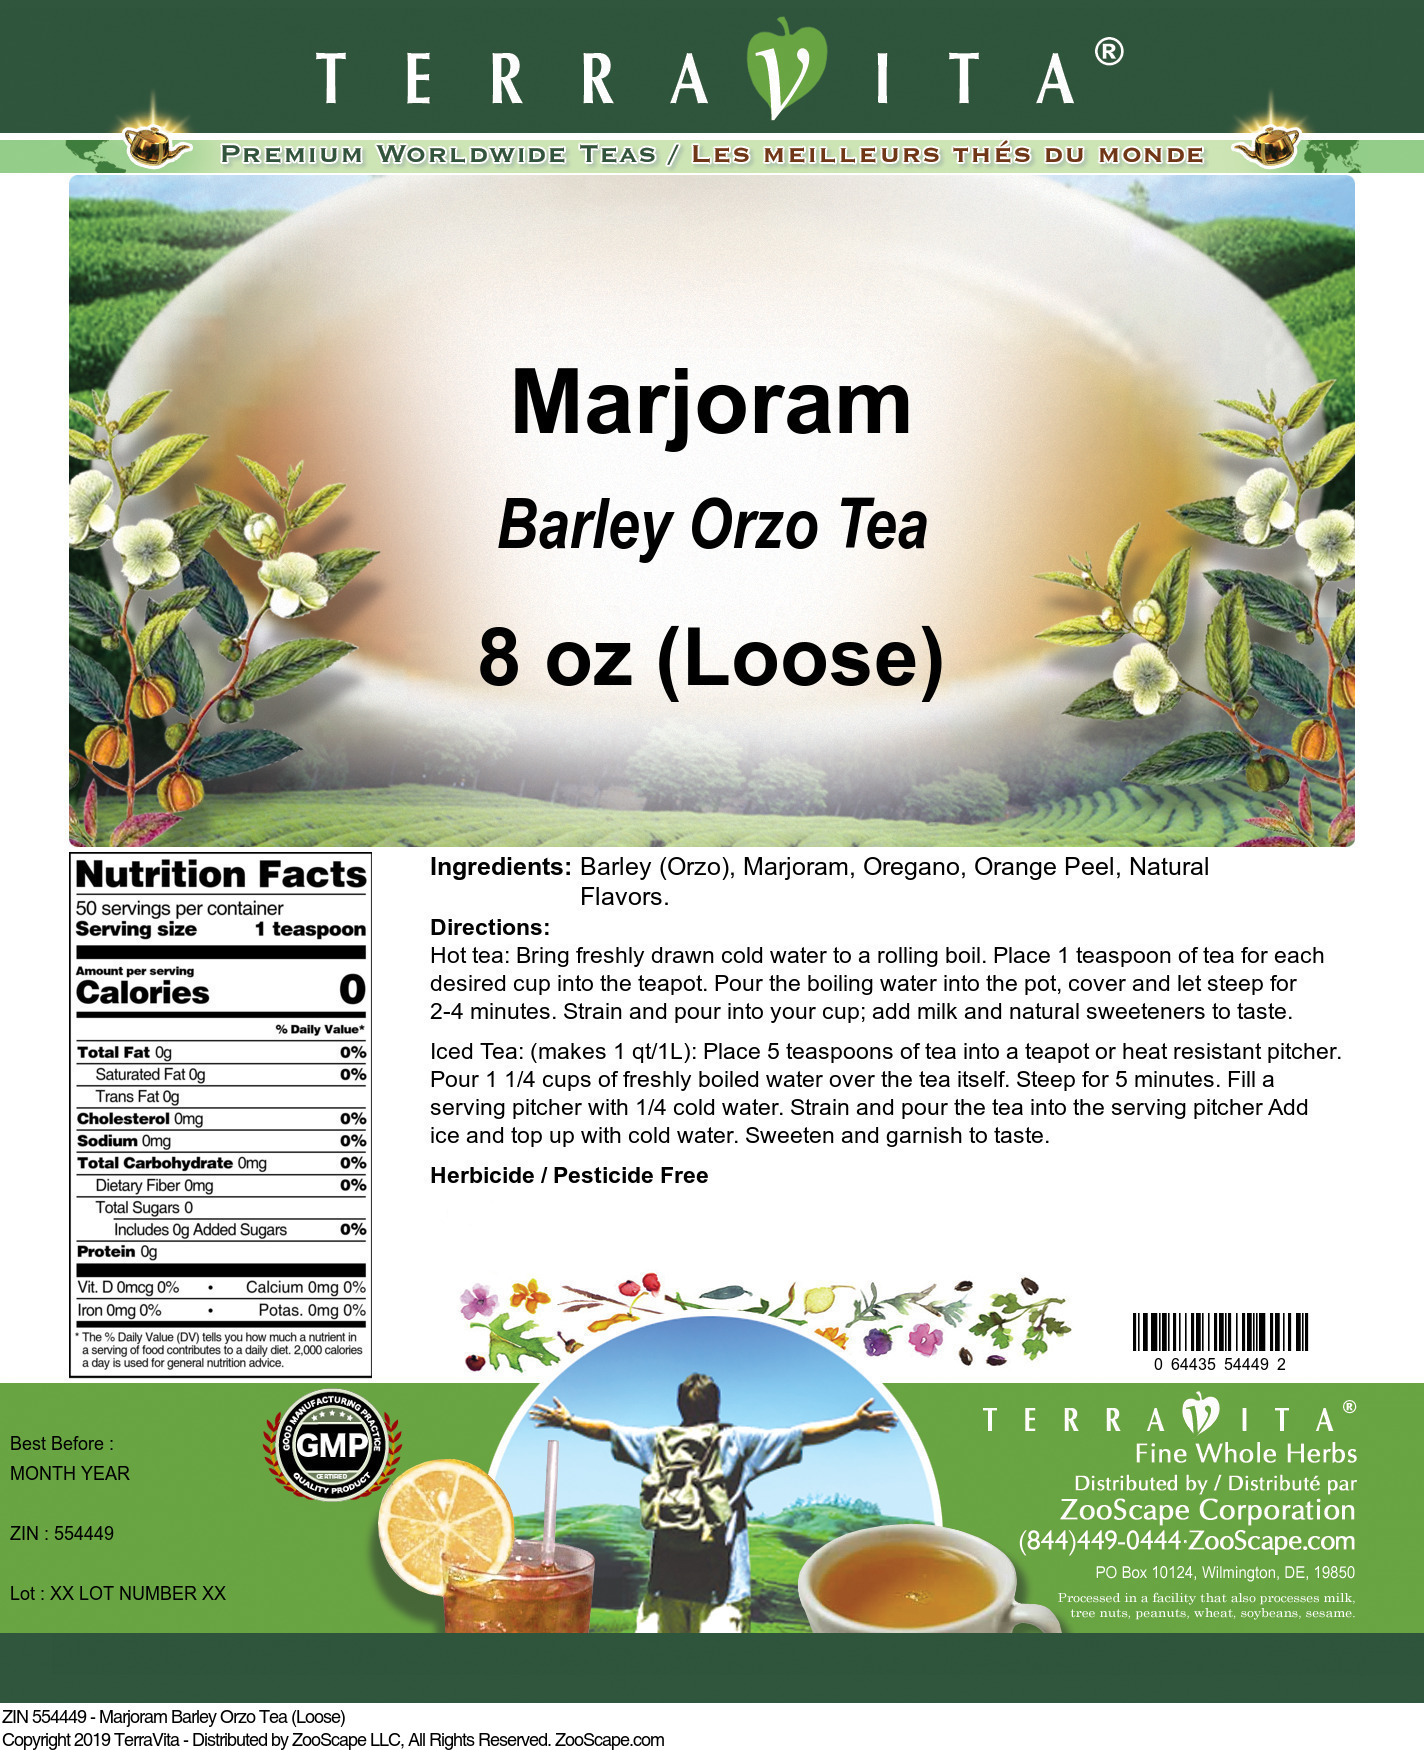 Marjoram Barley Orzo Tea (Loose) - Label